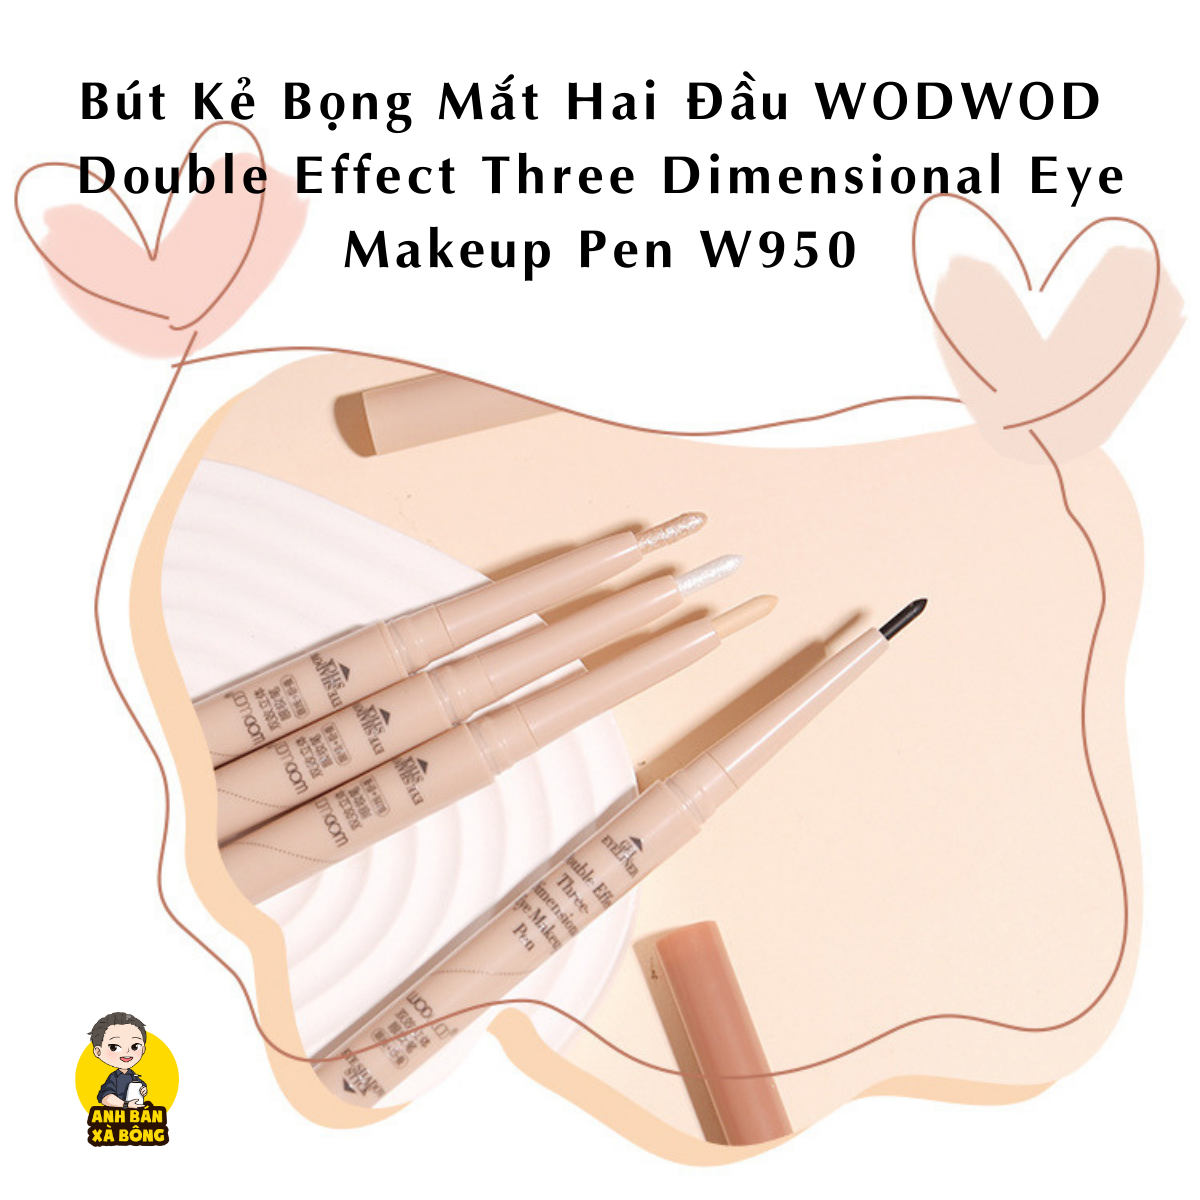 Bút Kẻ Bọng Mắt Hai Đầu WODWOD Double Effect Three Dimensional Eye Makeup Pen W950